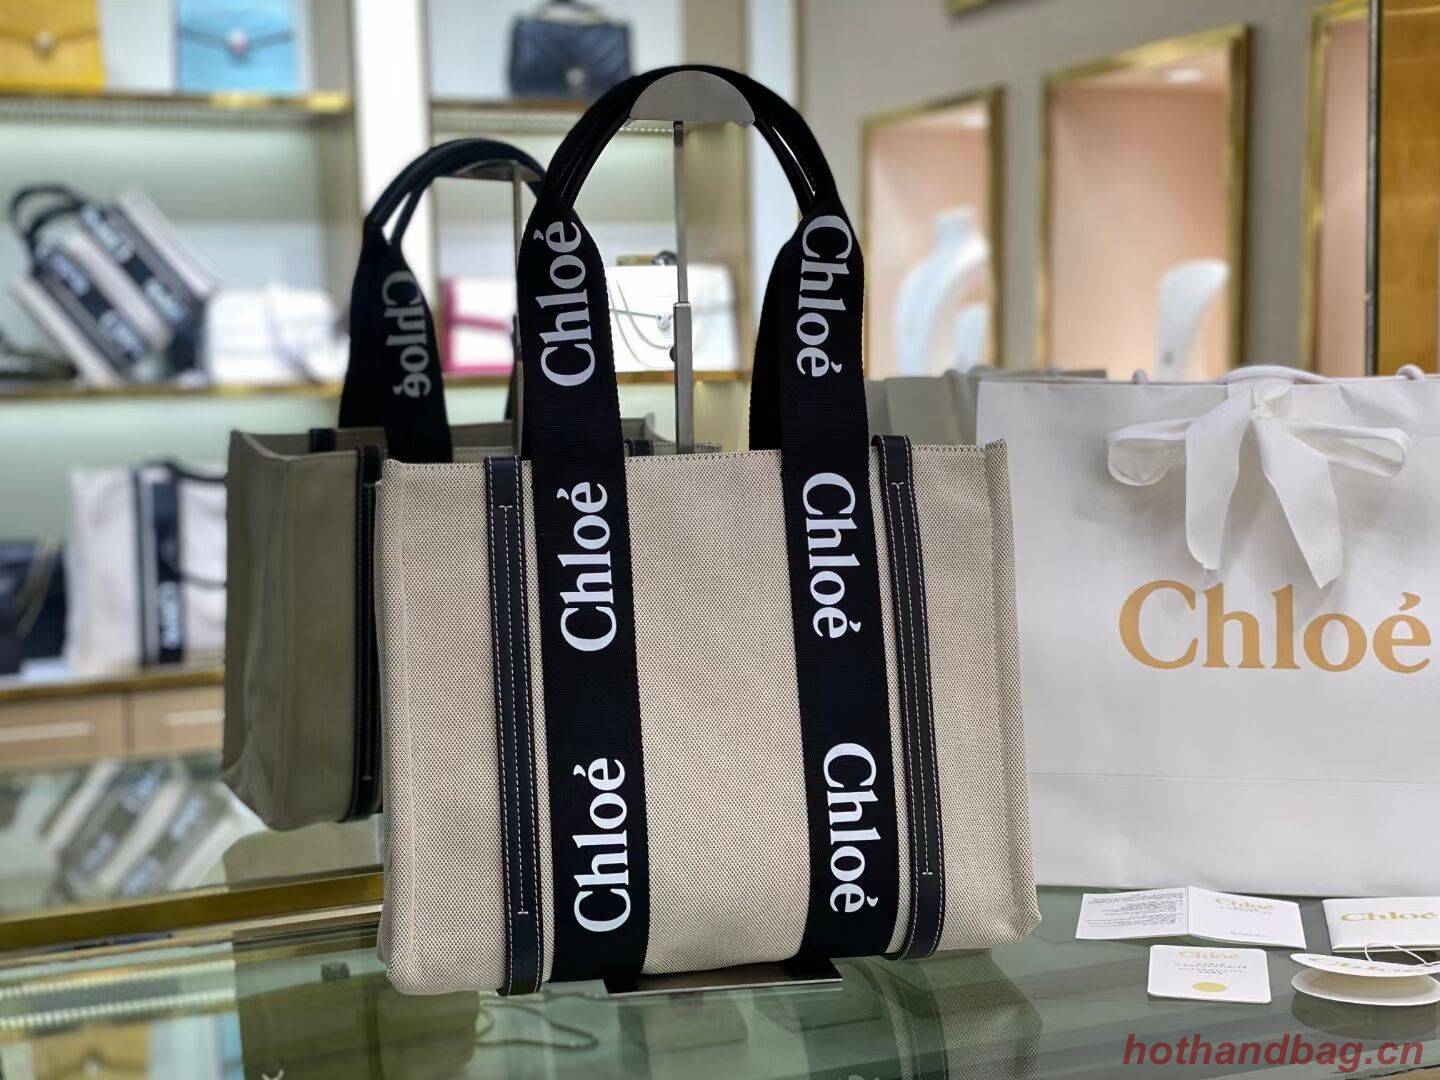 Chloe Cloth & leather 6C026 black